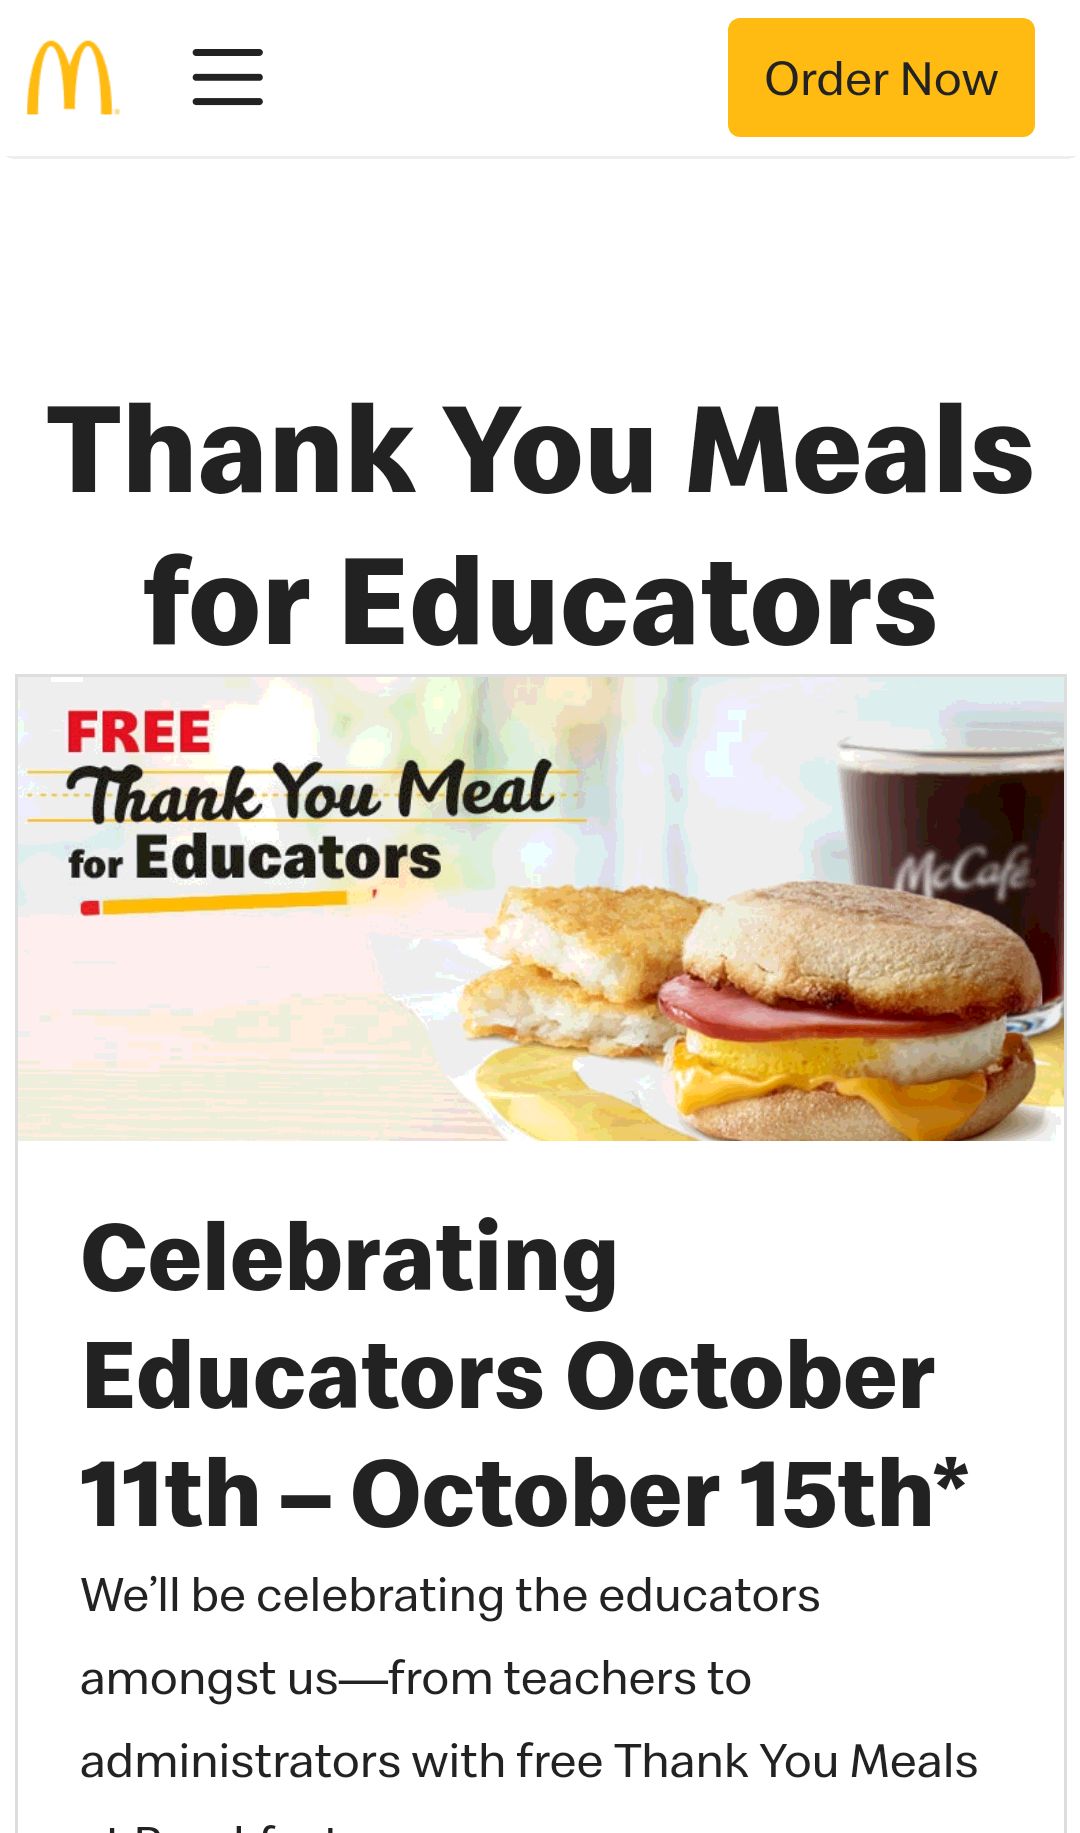 麥當勞提供免費套餐給教育工作者Free Thank You Meal for Educators